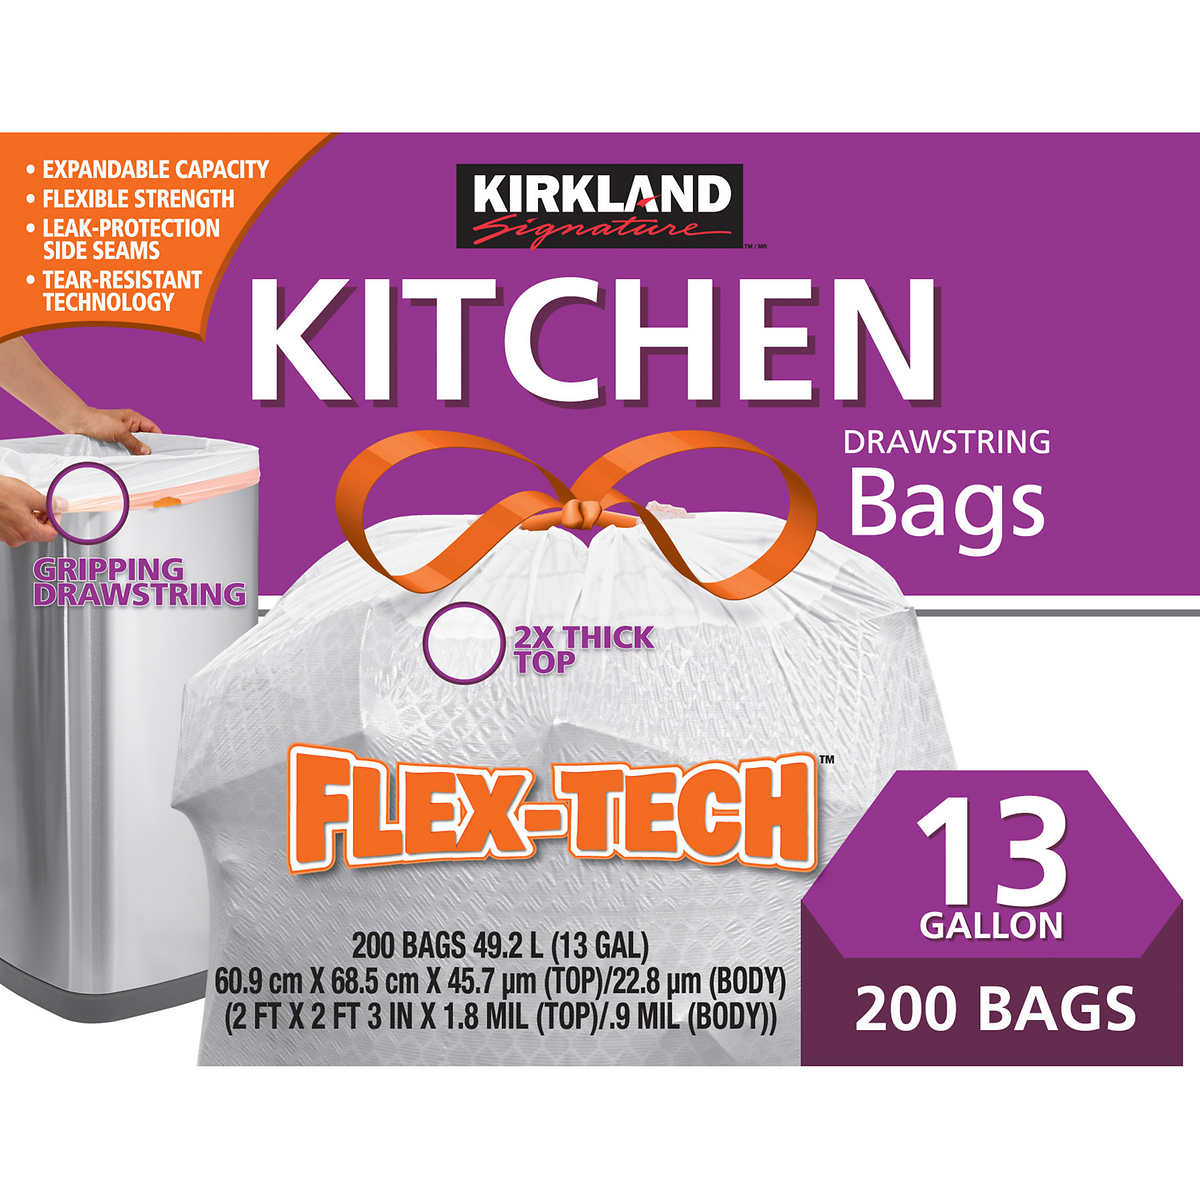 Kirkland Signature Outdoor Trash Bags, 50 gallon - 70 pack